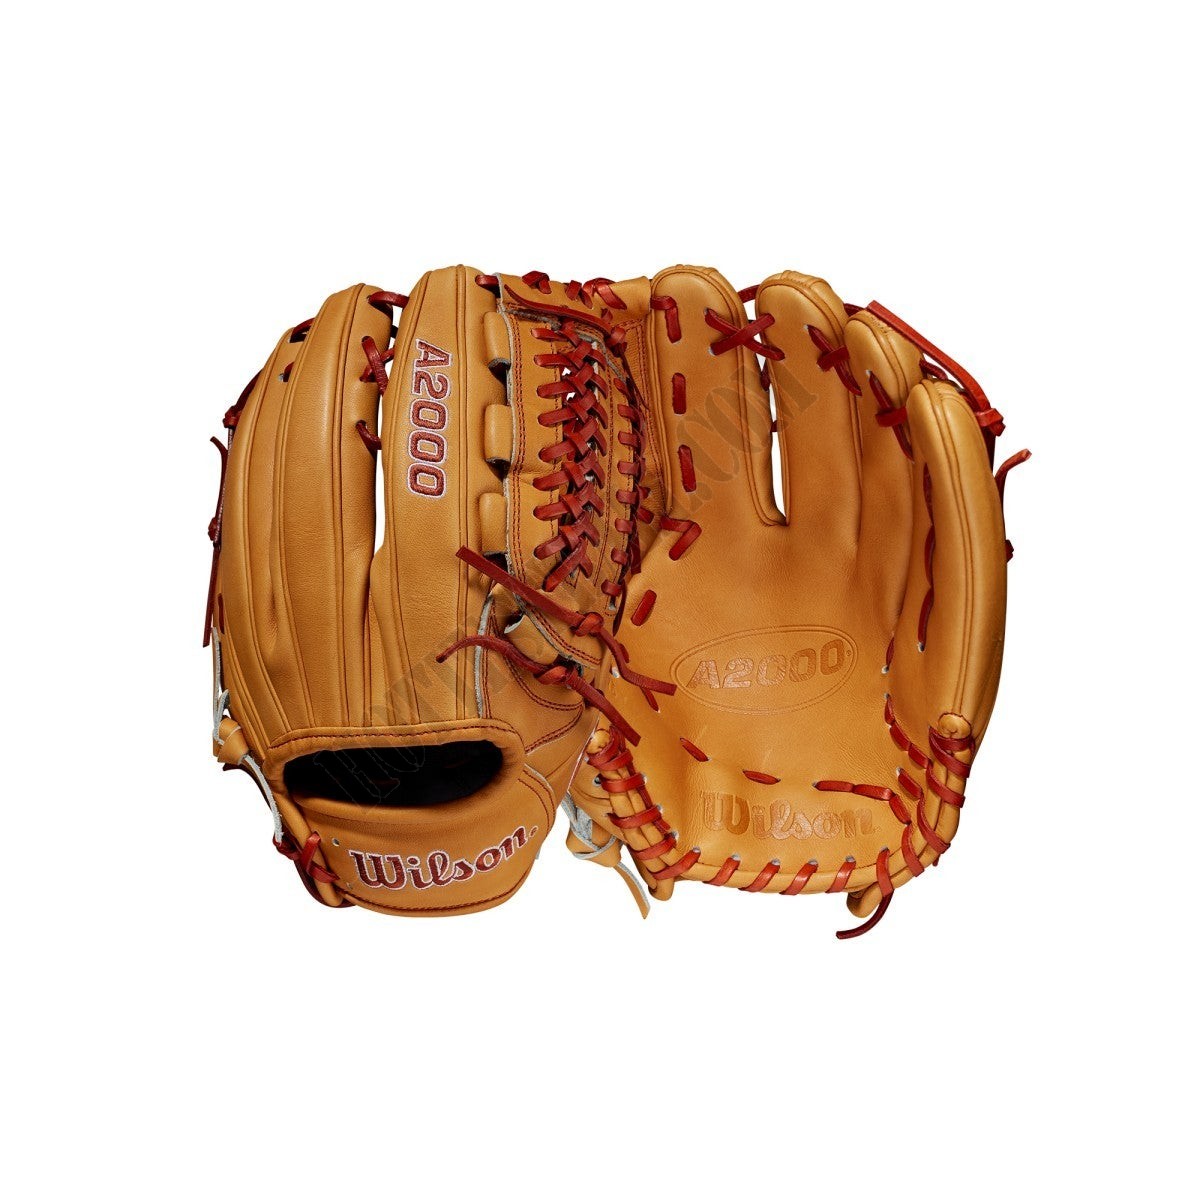 2021 A2000 D33 11.75" Pitcher's Baseball Glove ● Wilson Promotions - -0